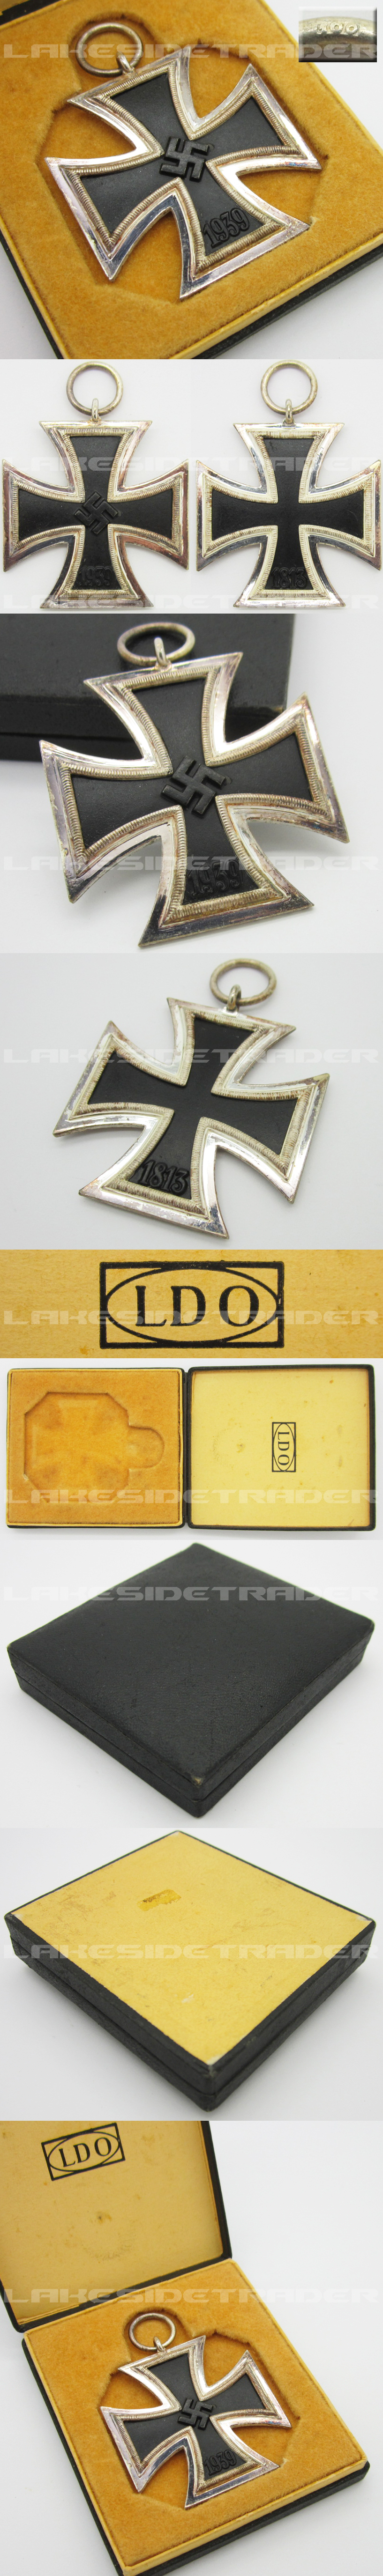 LDO Cased 2nd Class Iron Cross by 100